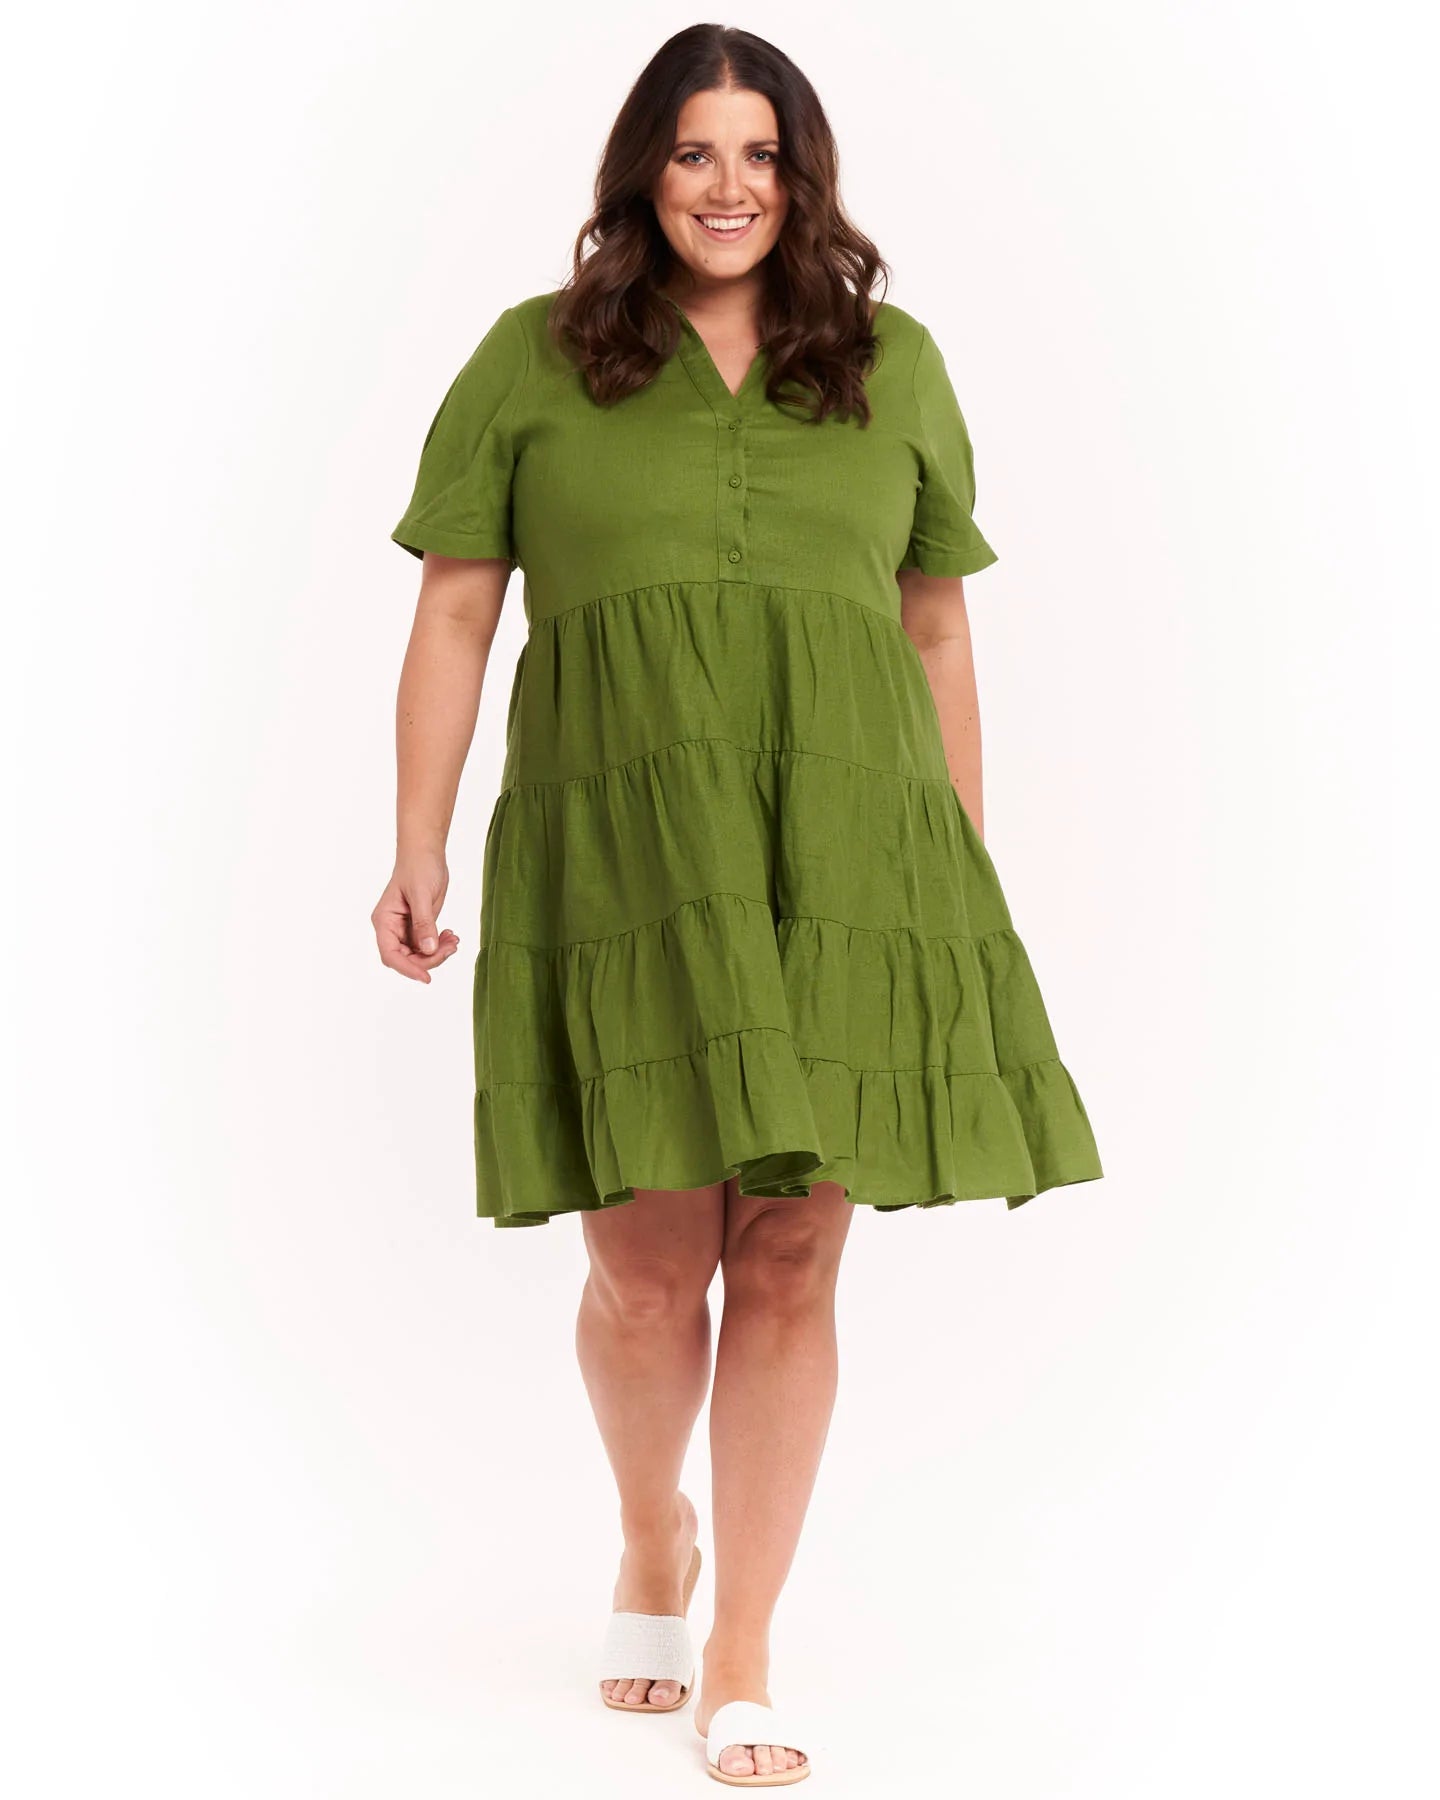 Olive Green Dress Shirt | The Lemongrass